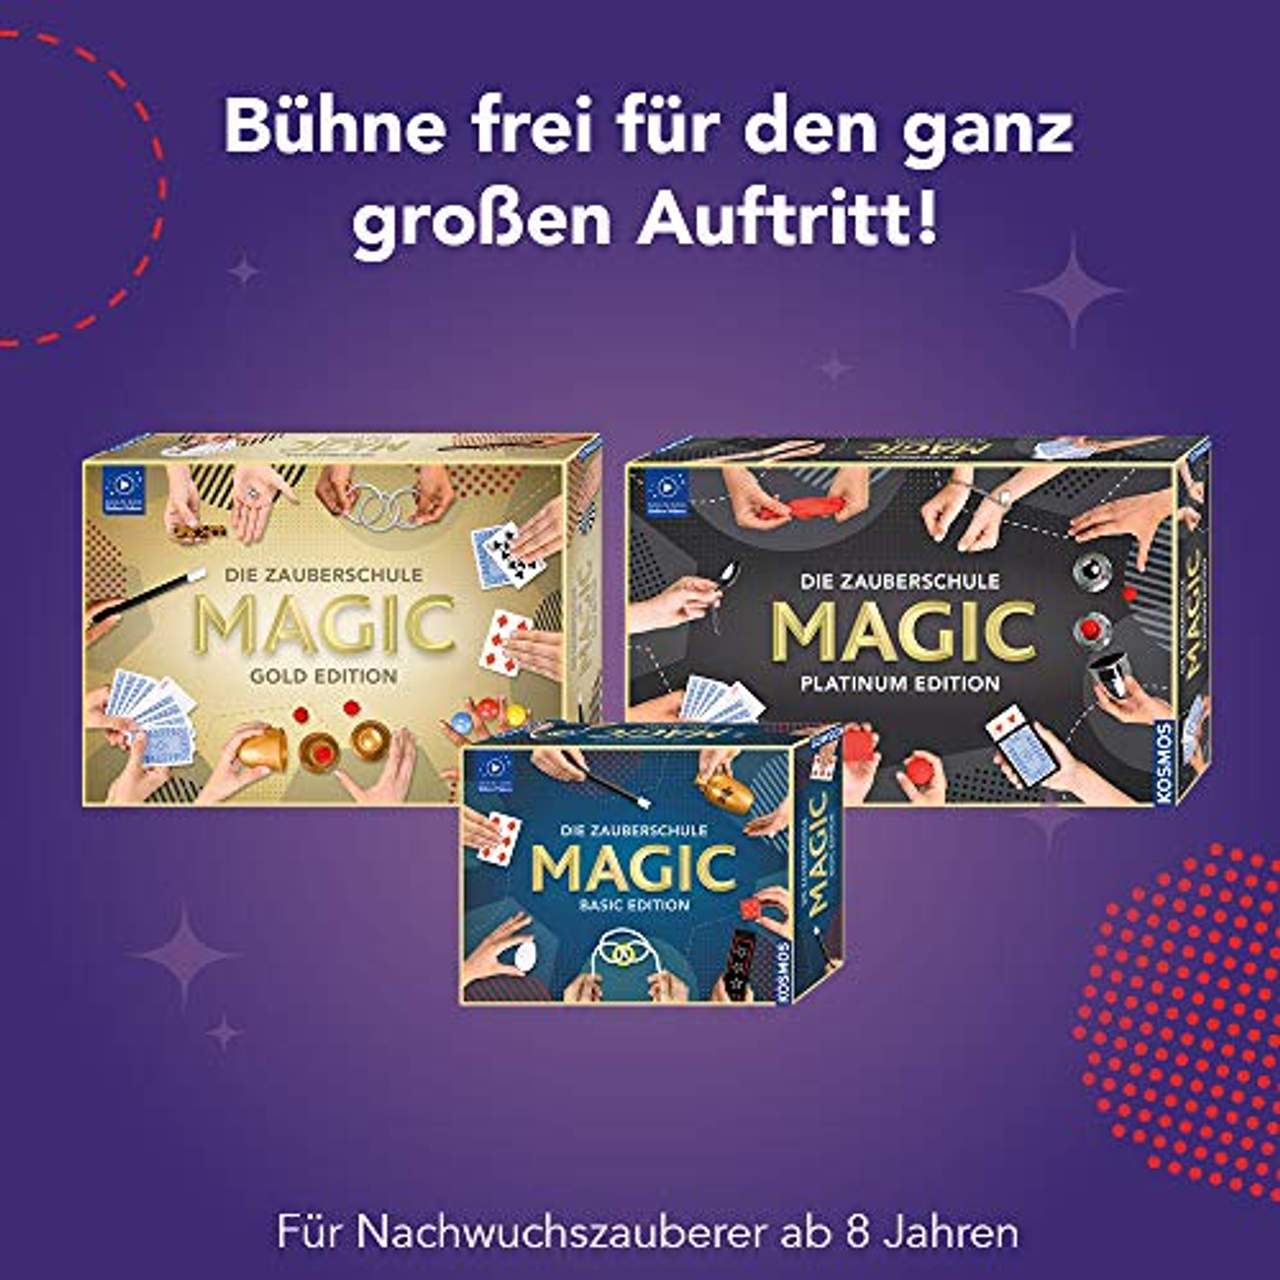 Kosmos Die Zauberschule Magic Basic Edition